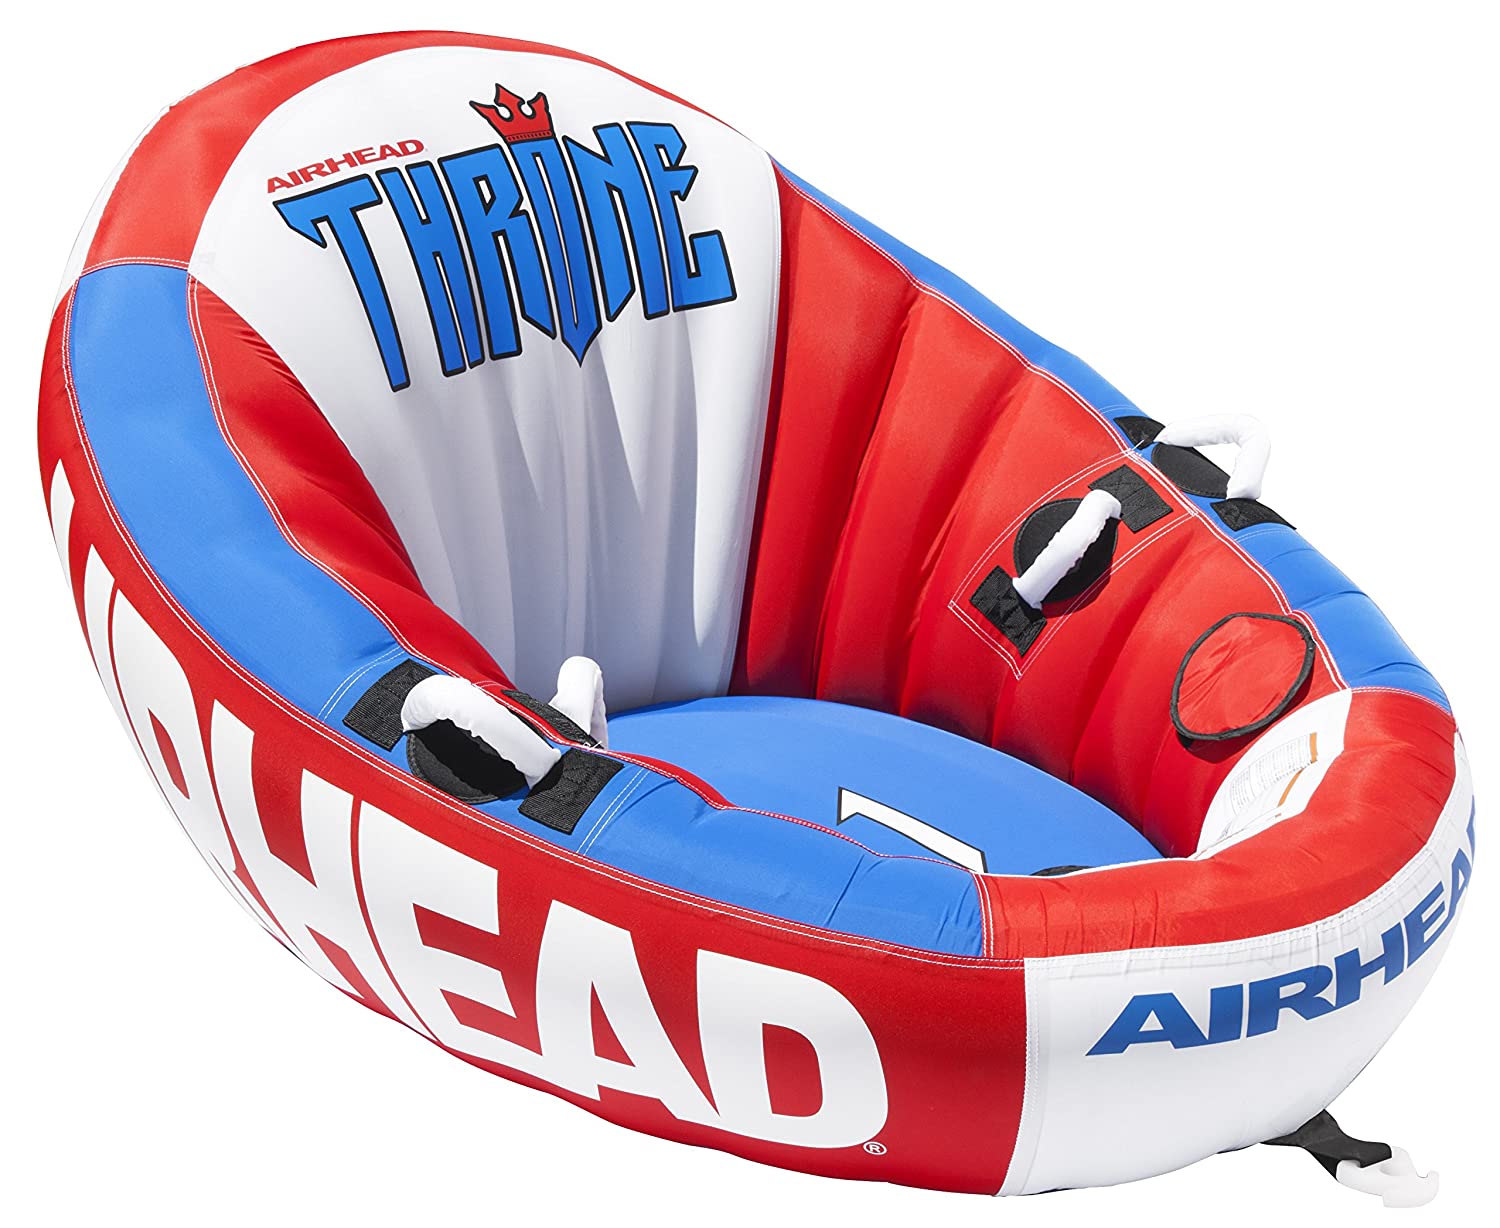 Airhead Throne 1 Rope